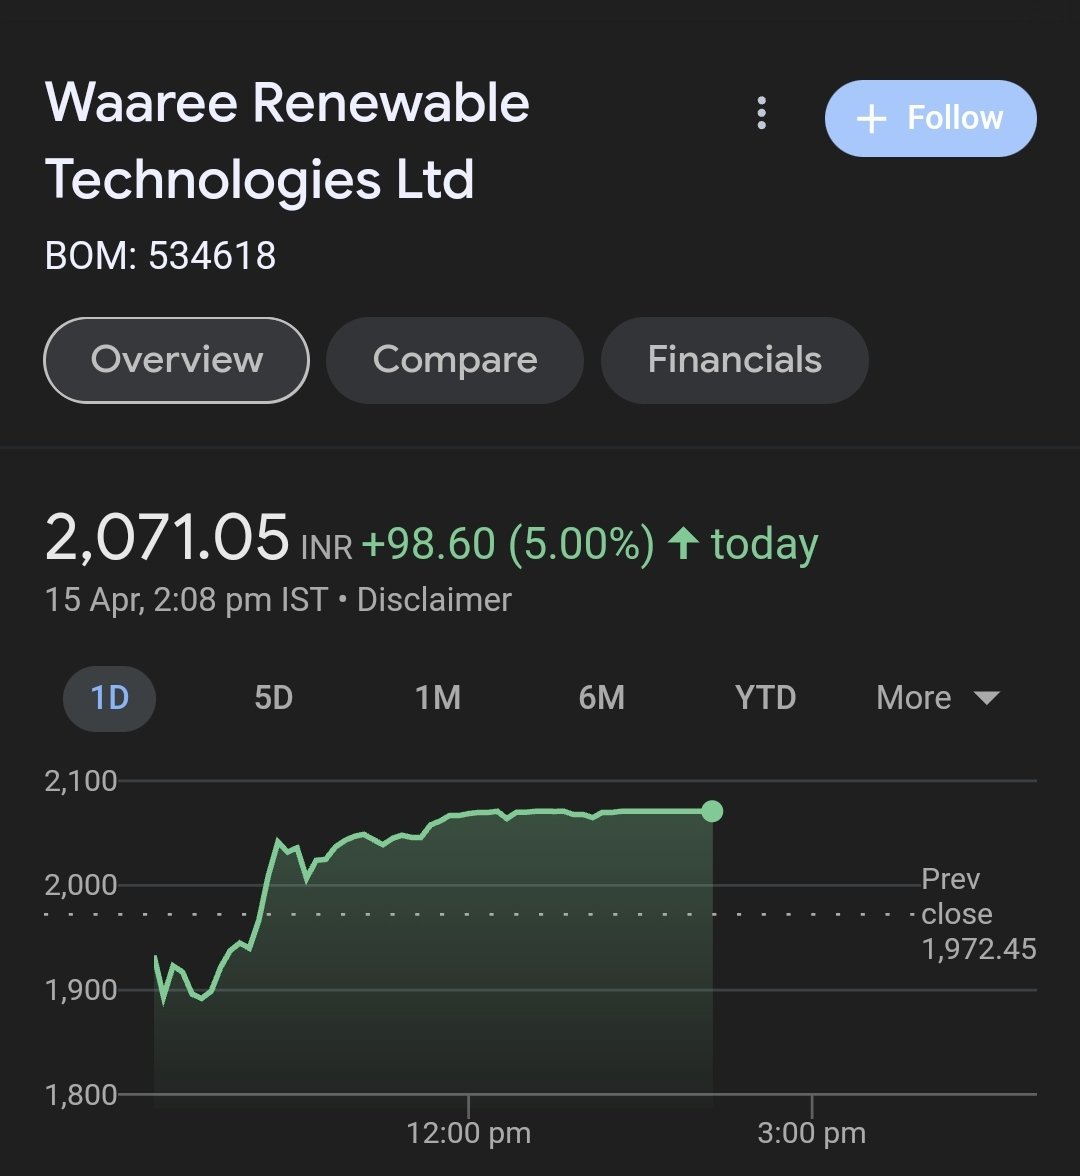 📌10K/ share target done (post split 1:5 adjusted target value comes to 2K/share) 🎯

#WaareeRenewable #WaareeRTL #WaareeRT #waaree